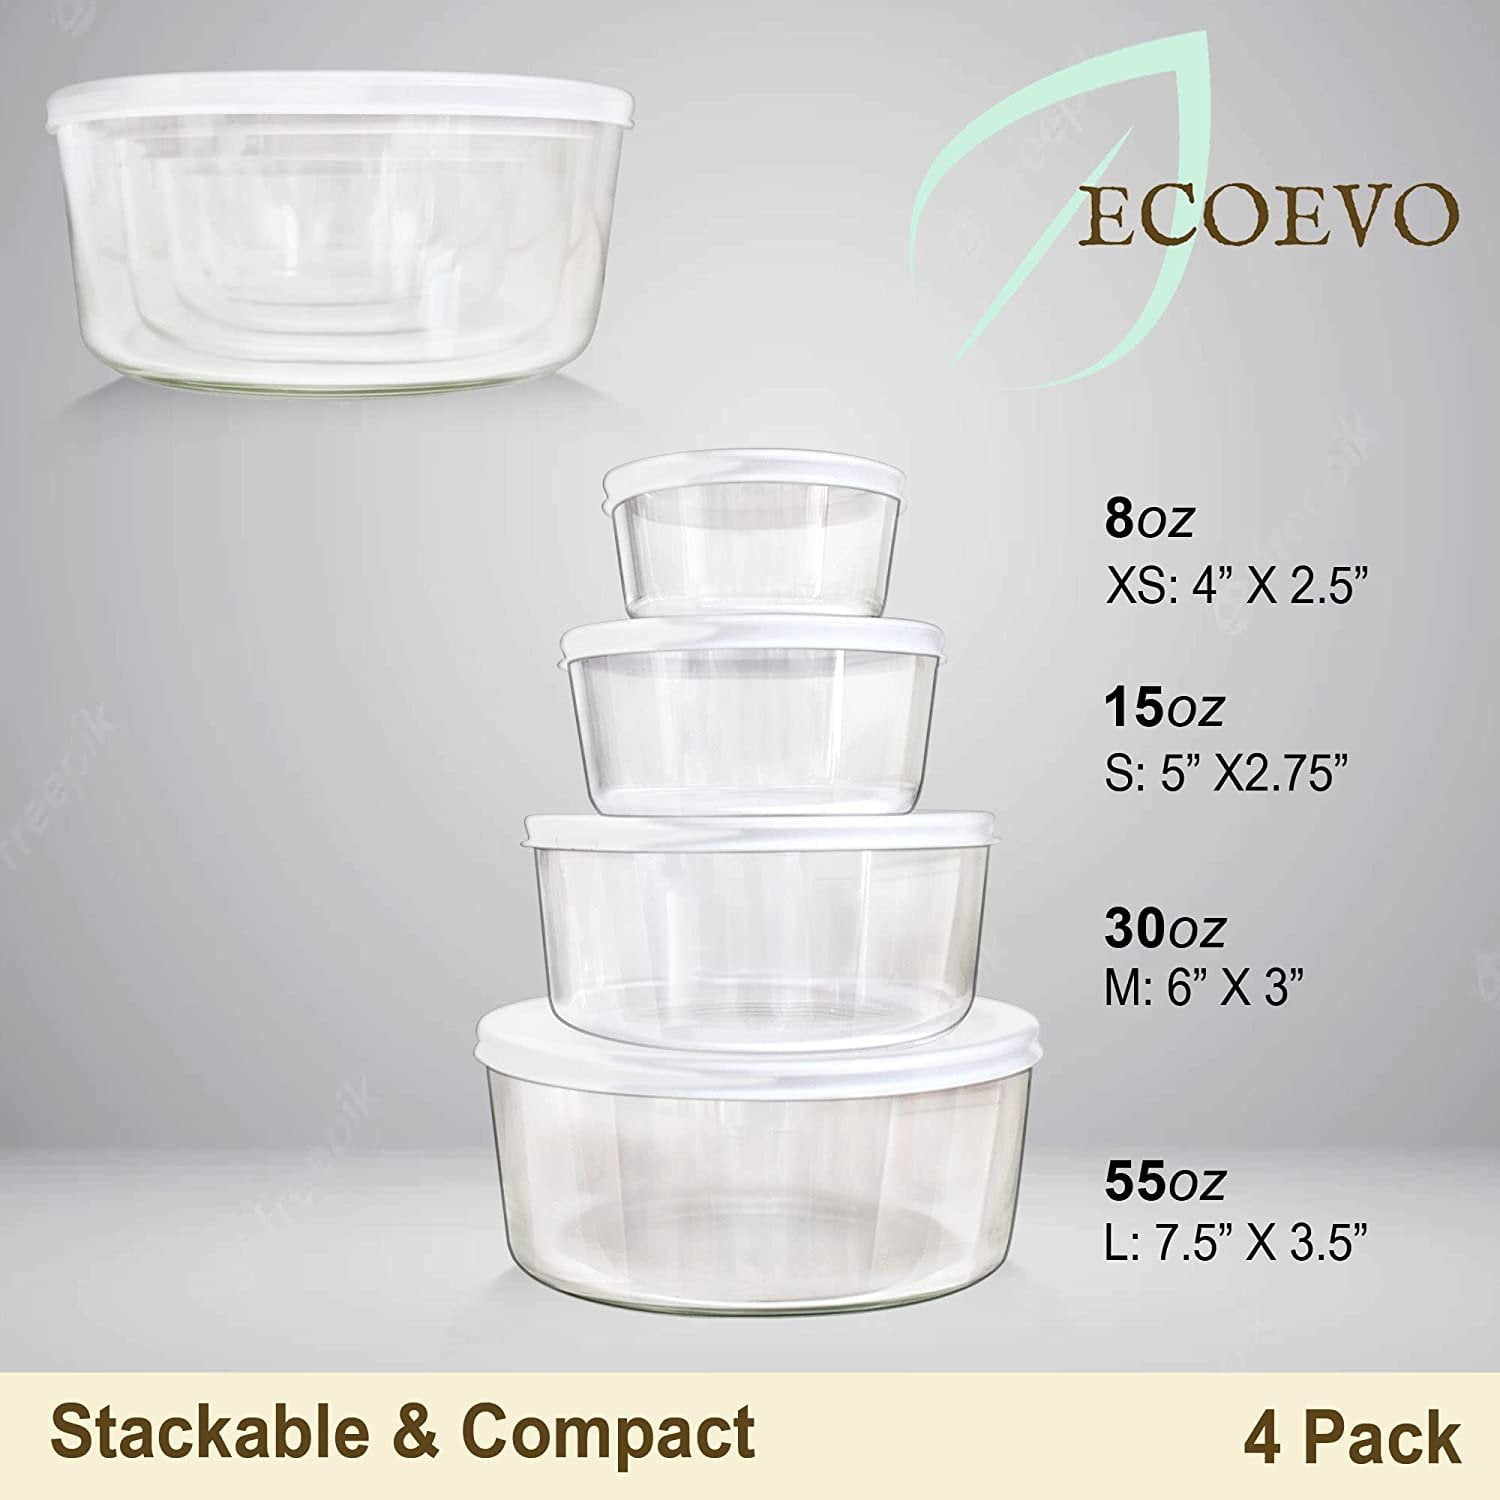 Large Glass Food Storage Containers 4 Pc (2700ML/ 91 Oz & 1520ML/ 51 Oz)  Airtight Glass Storage Containers, Leak Proof BPA Free Food Storage